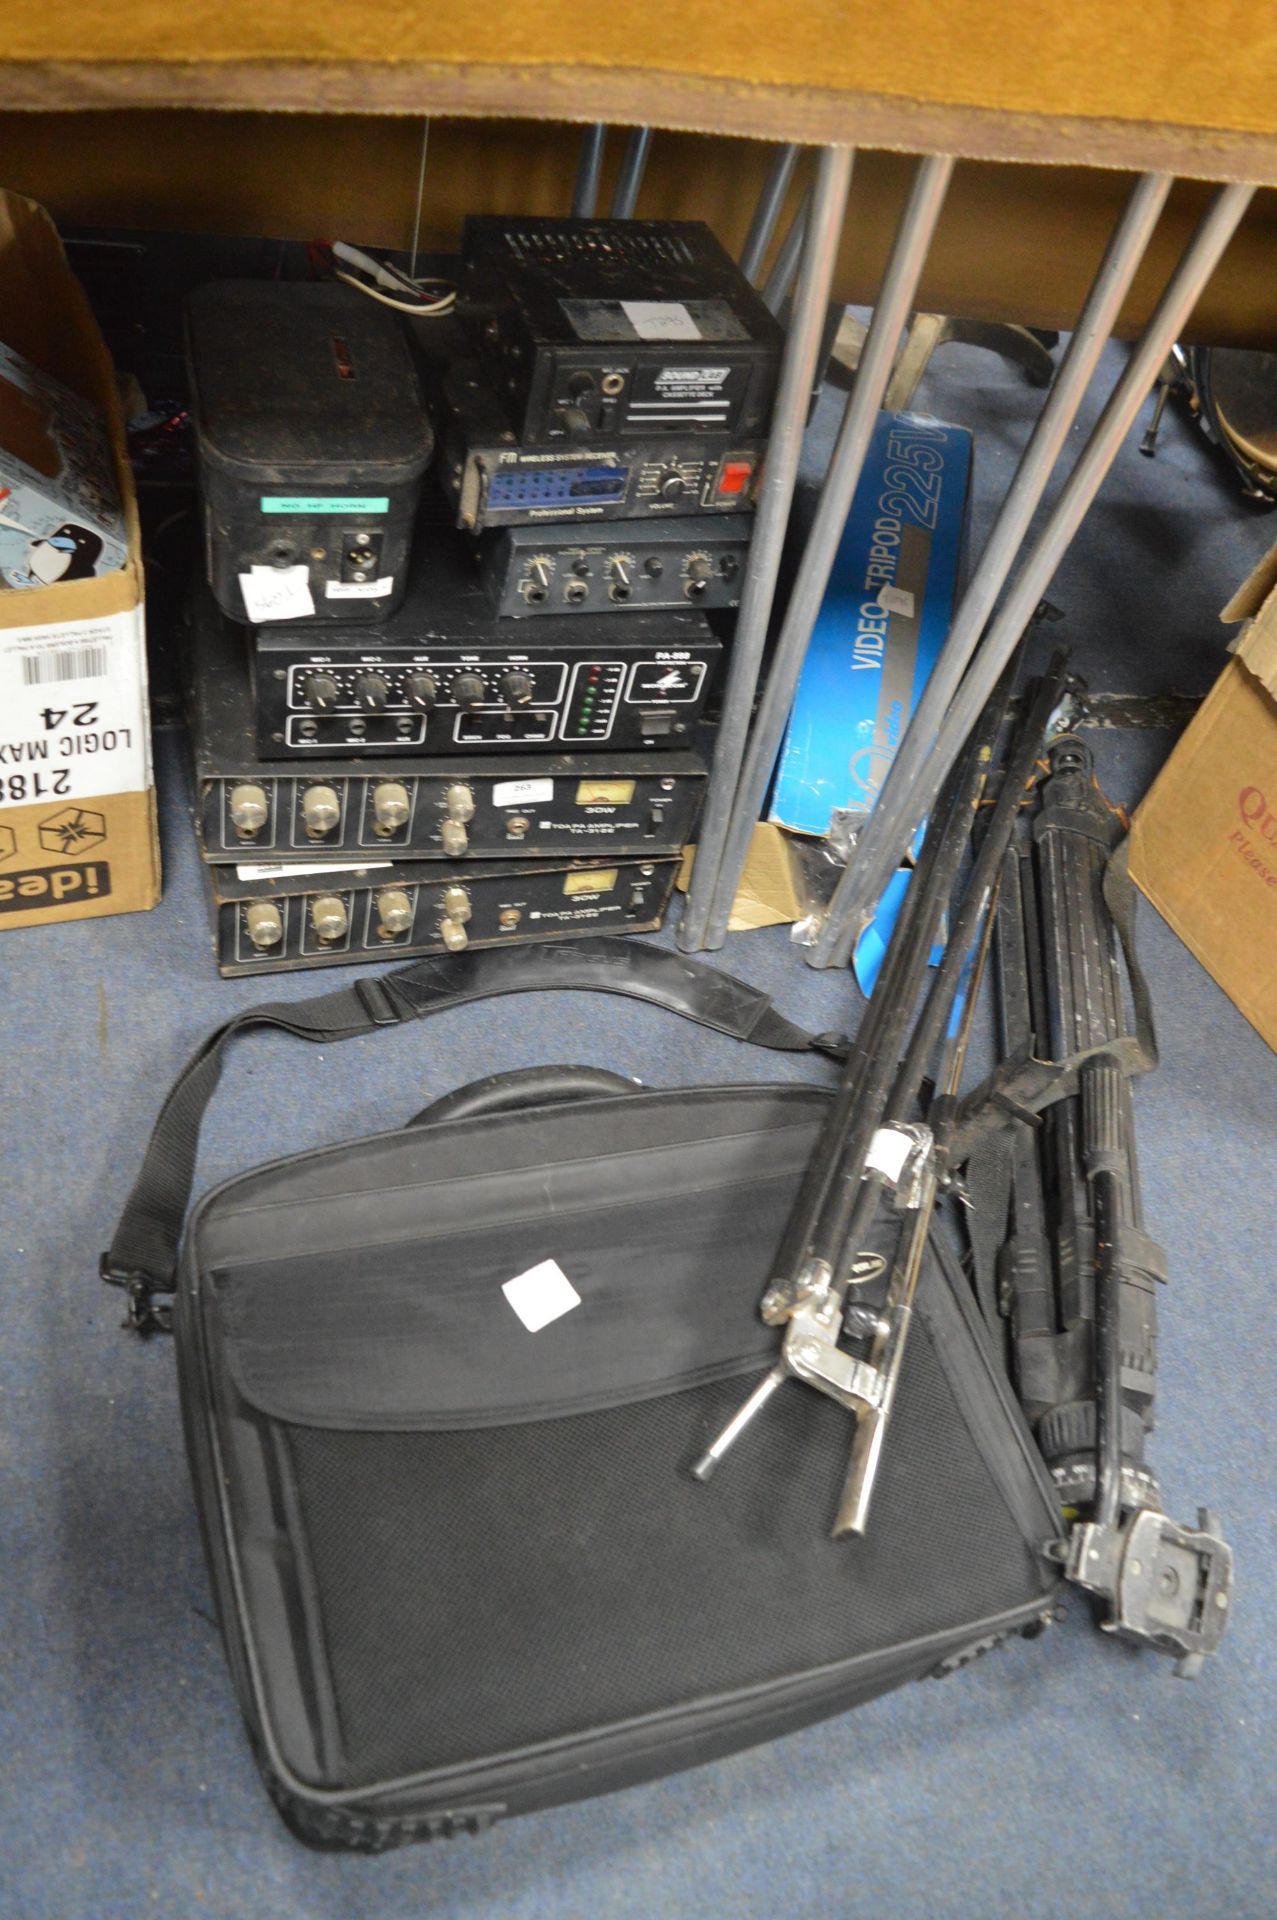 PA Equipment; Amplifiers, Speakers, Stands, etc.